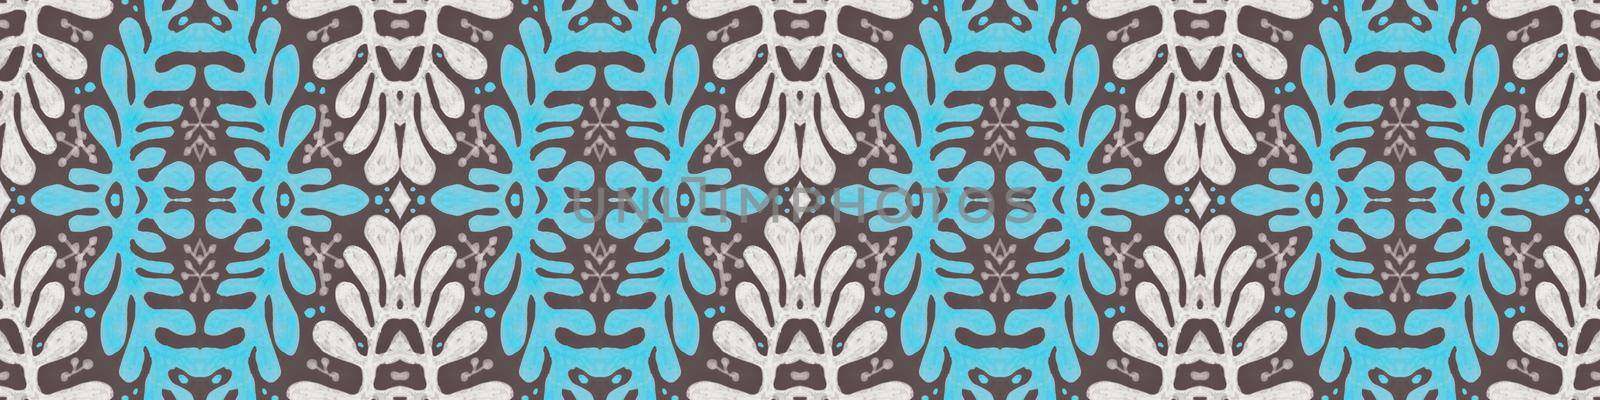 Talavera ceramic. Seamless azulejo mosaic. Retro italian texture. Talavera pattern. Arabesque geometric fabric. Abstract majolica or portuguese tile background. Floral Talavera pattern.